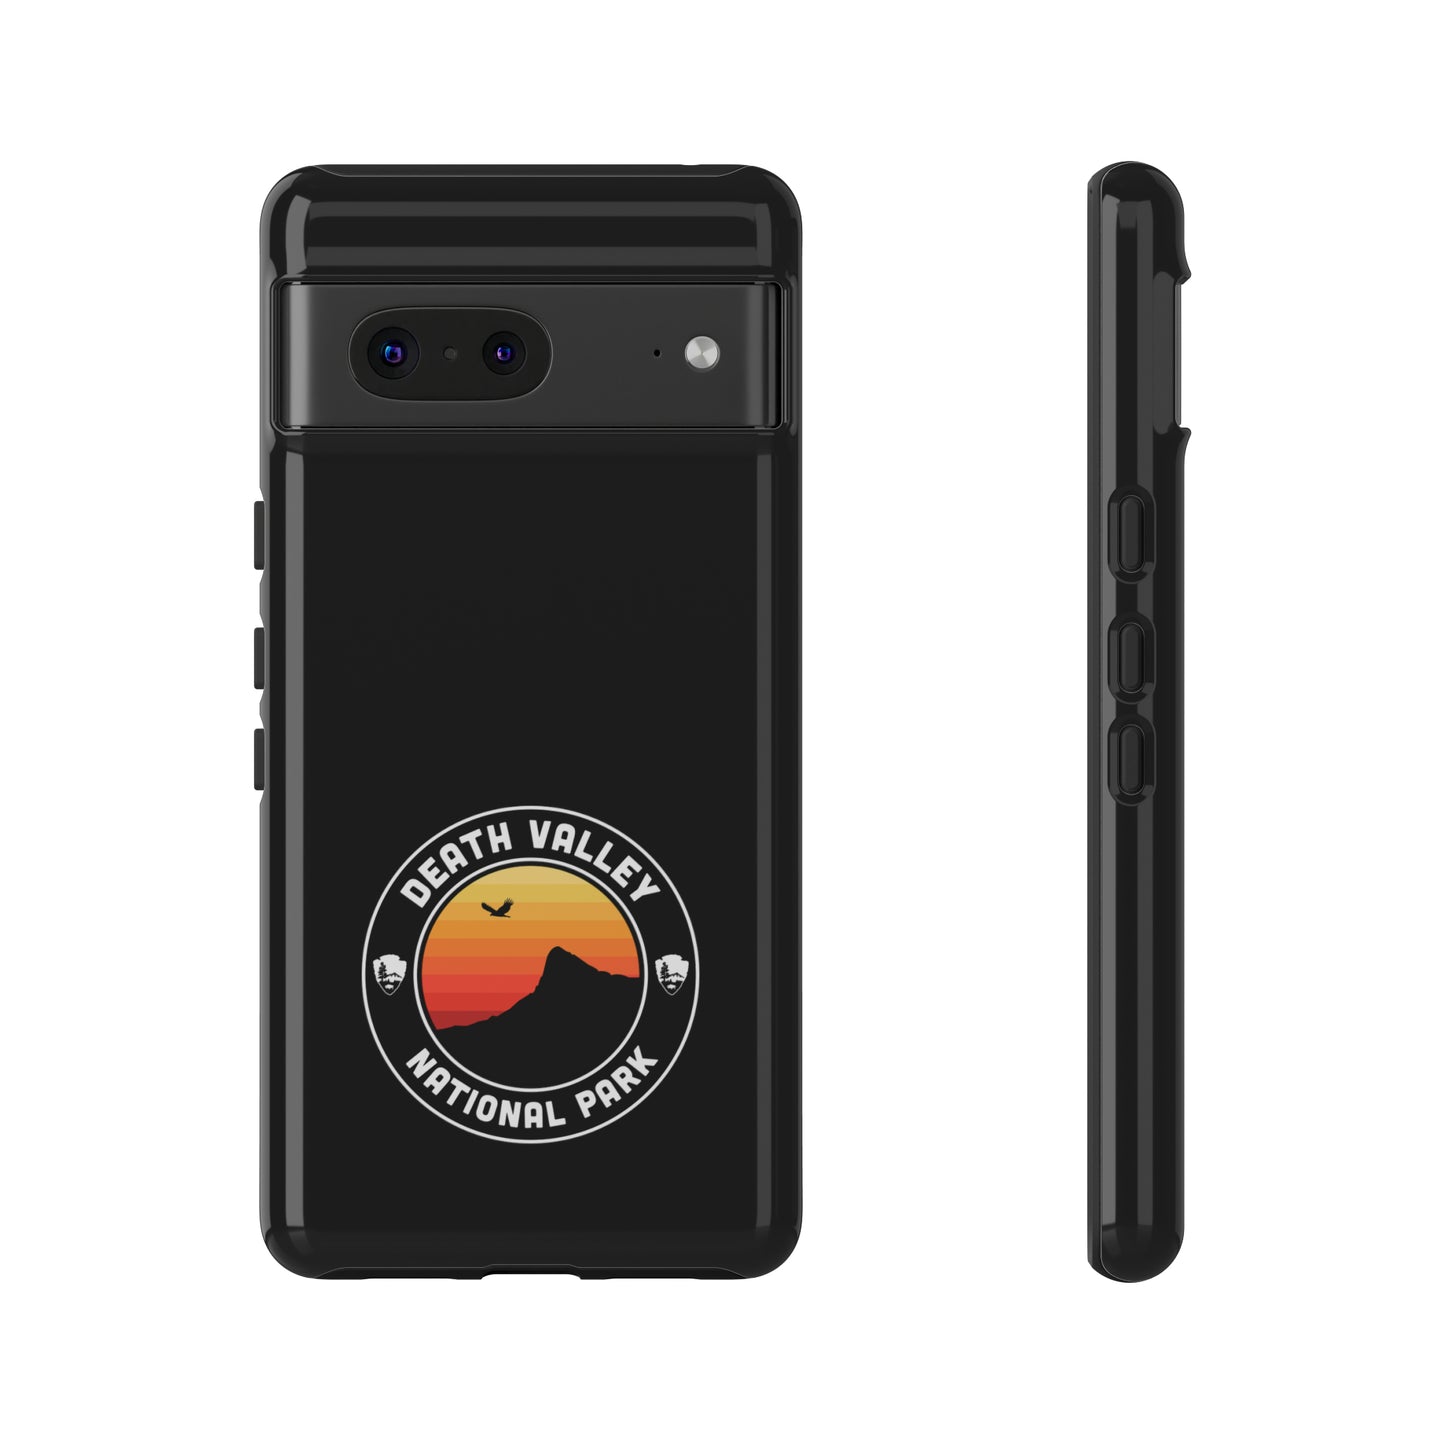 Death Valley National Park Phone Case - Round Emblem Design